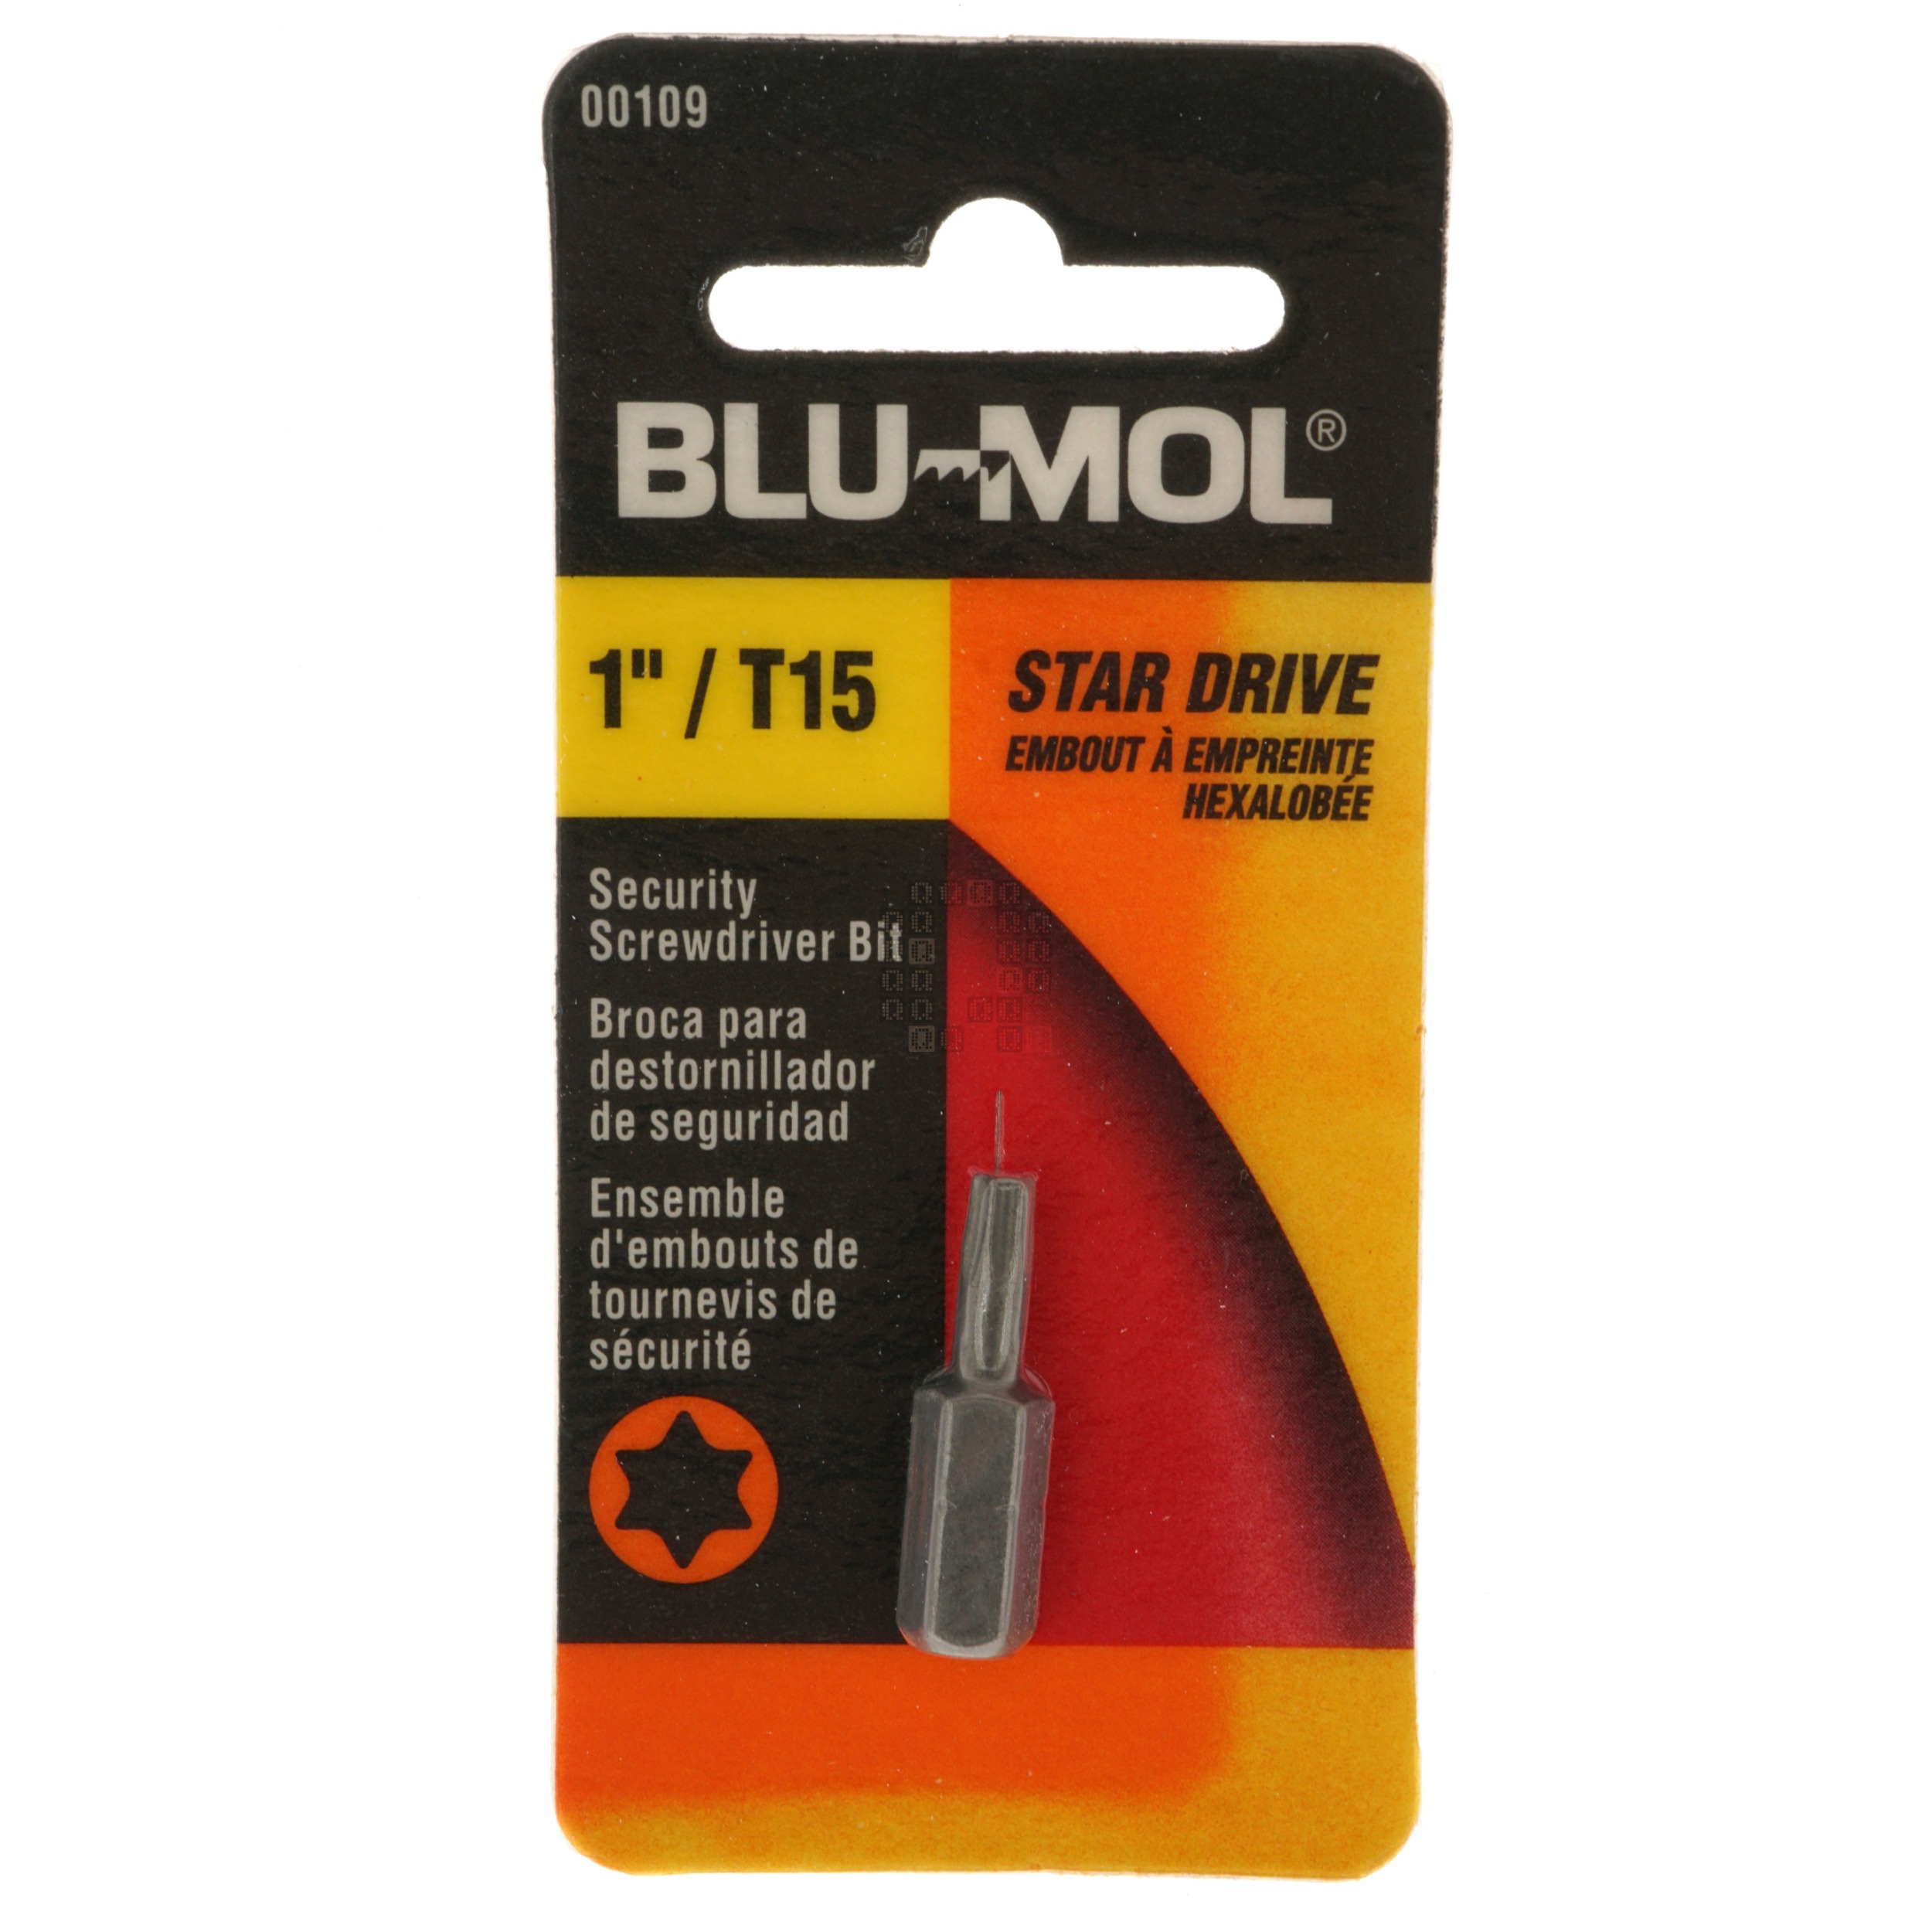 Blu-Mol 00109 T15 TORX / Star Drive Security Screwdriver Bit, 1" Length